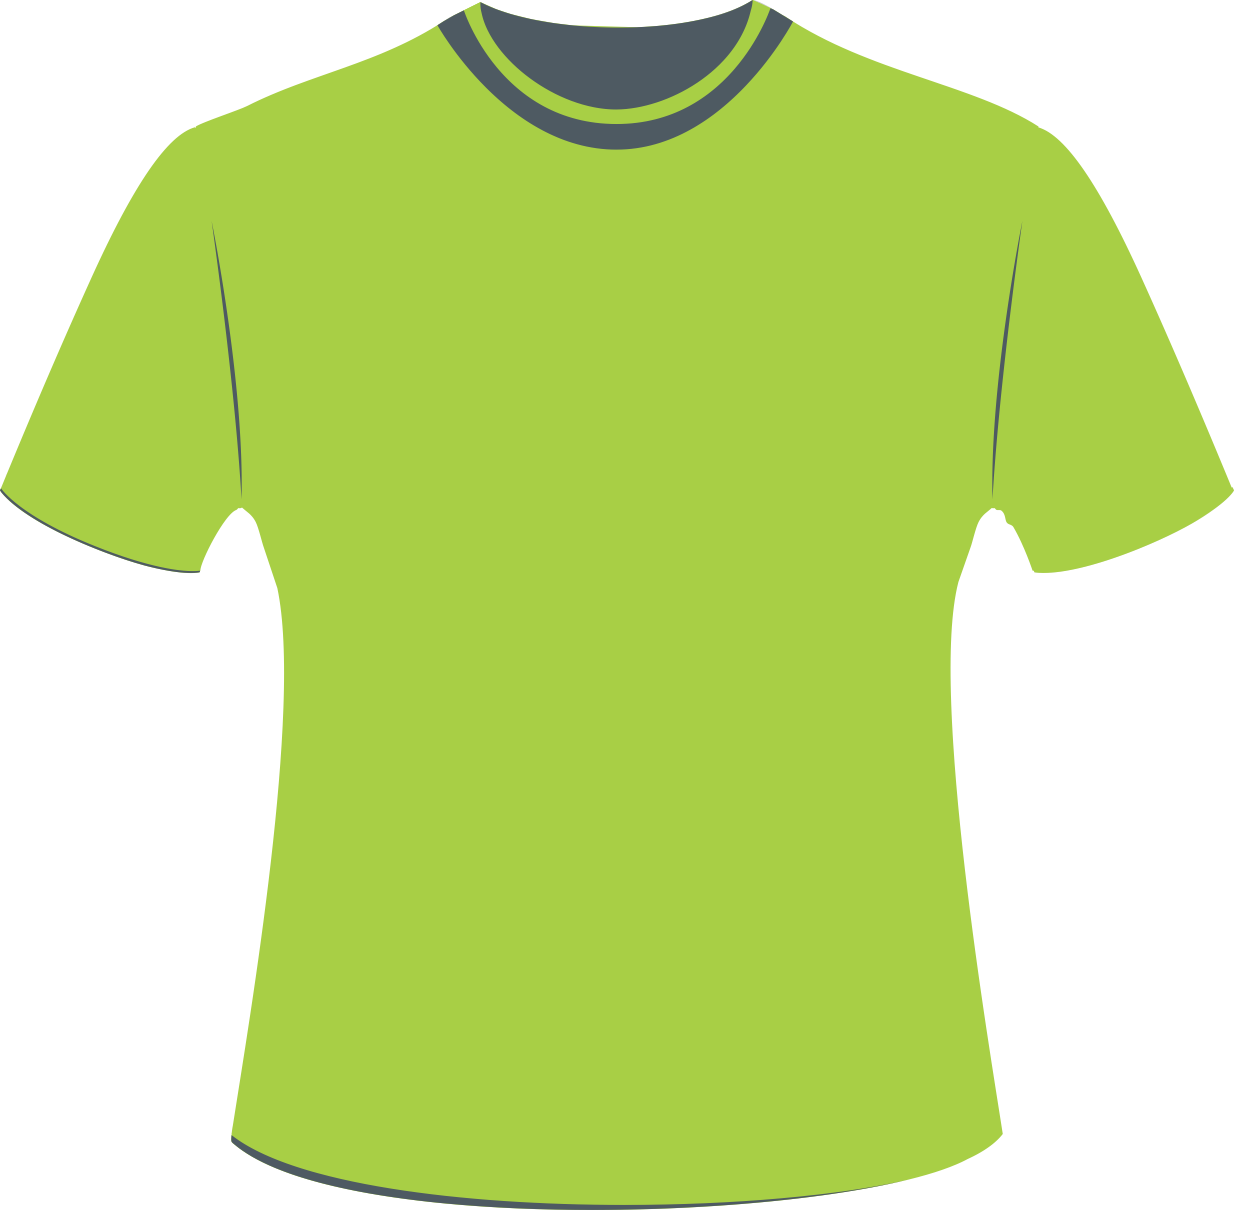 Mockup Camiseta Verde Editável